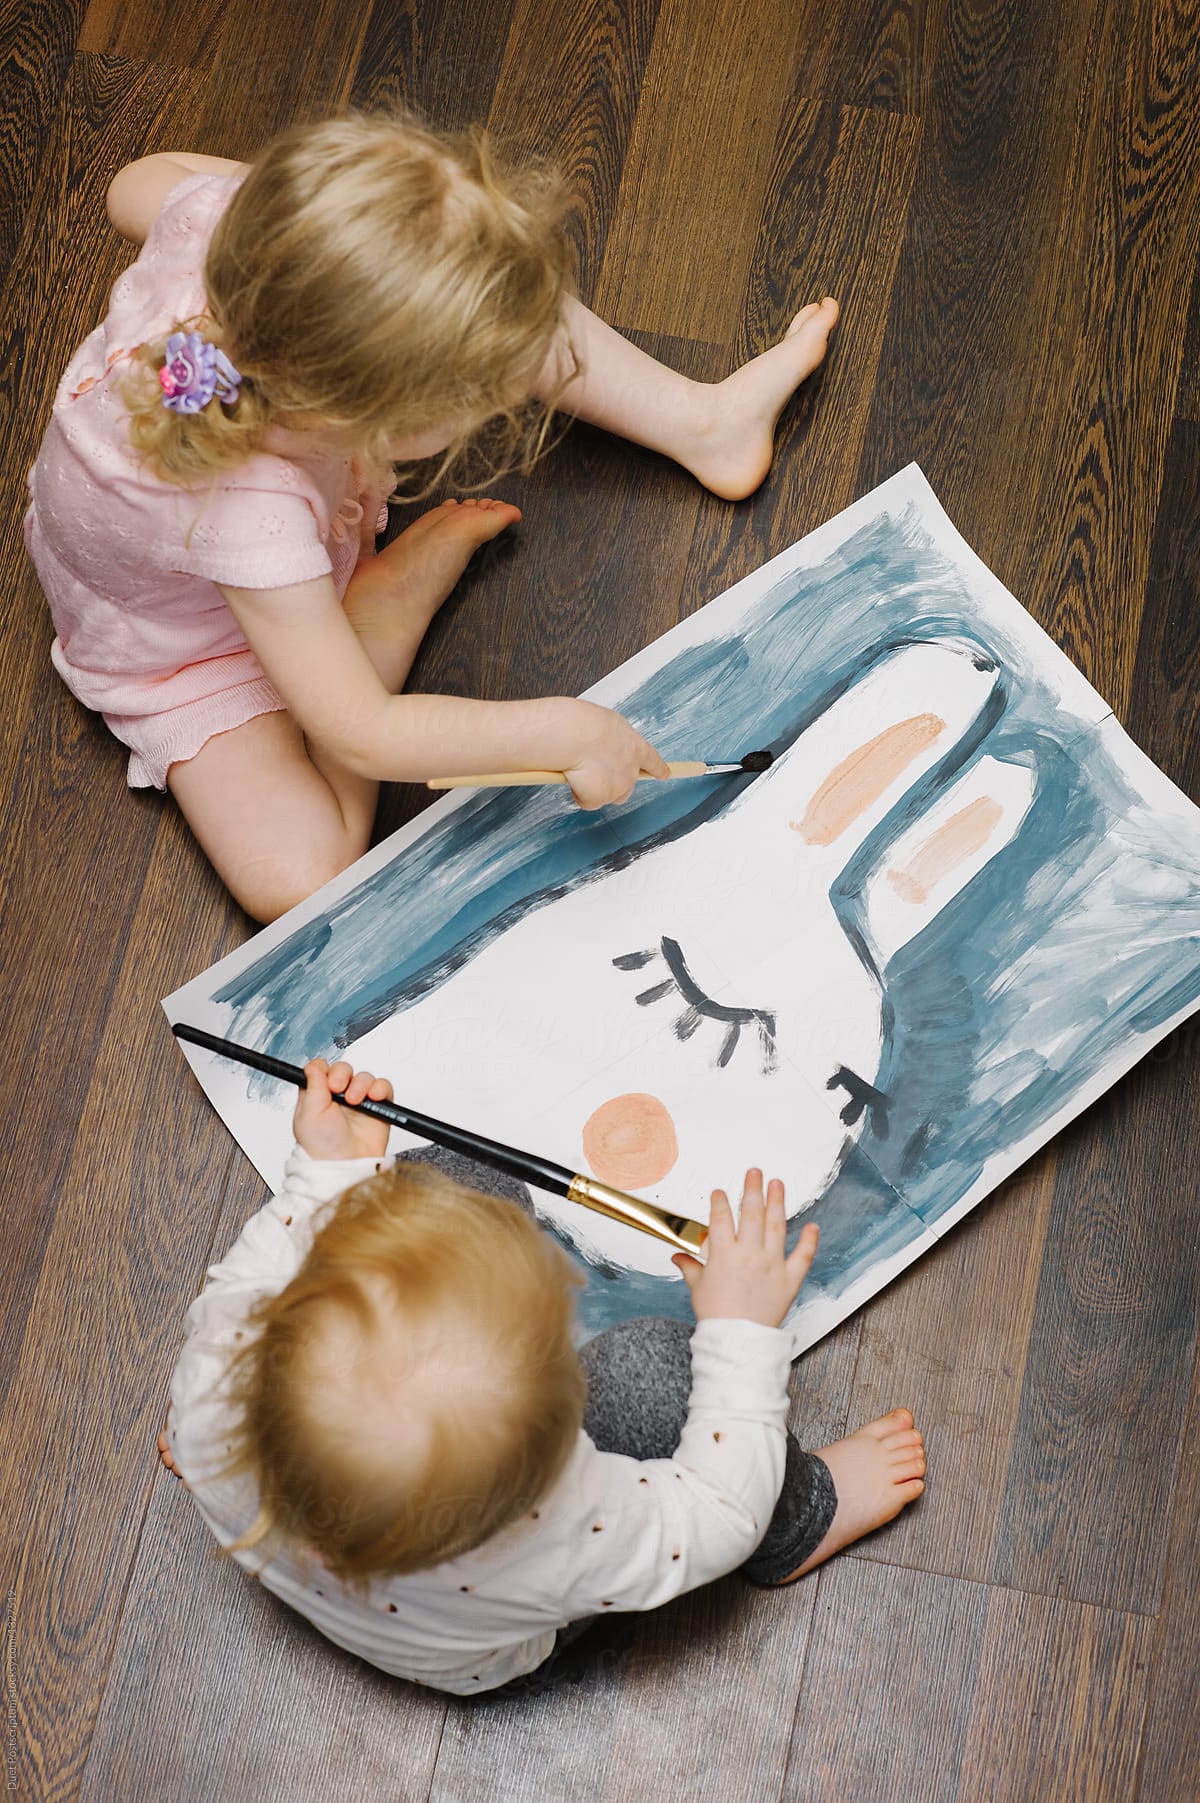 Children drawing a rabbit